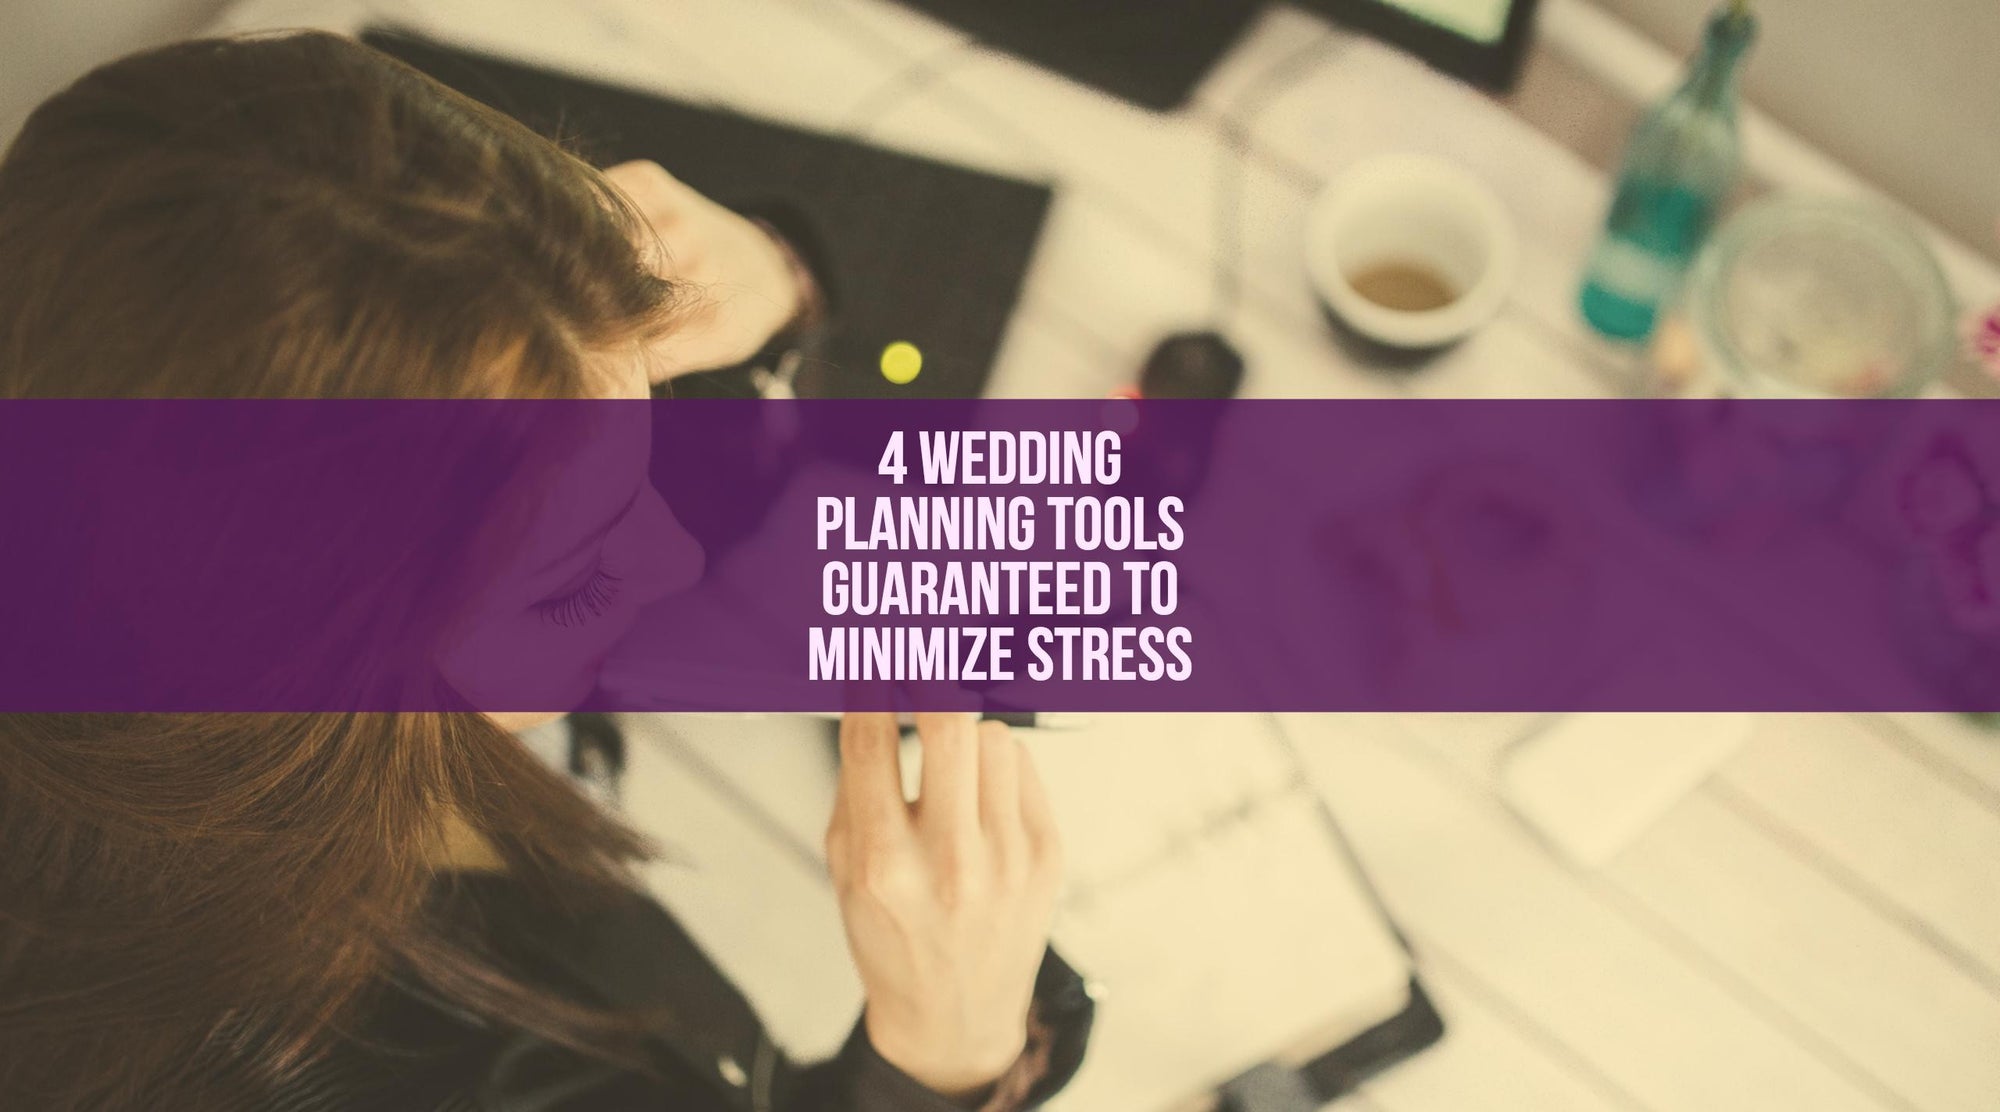 4 Wedding Planning Tools Guaranteed to Minimize Stress